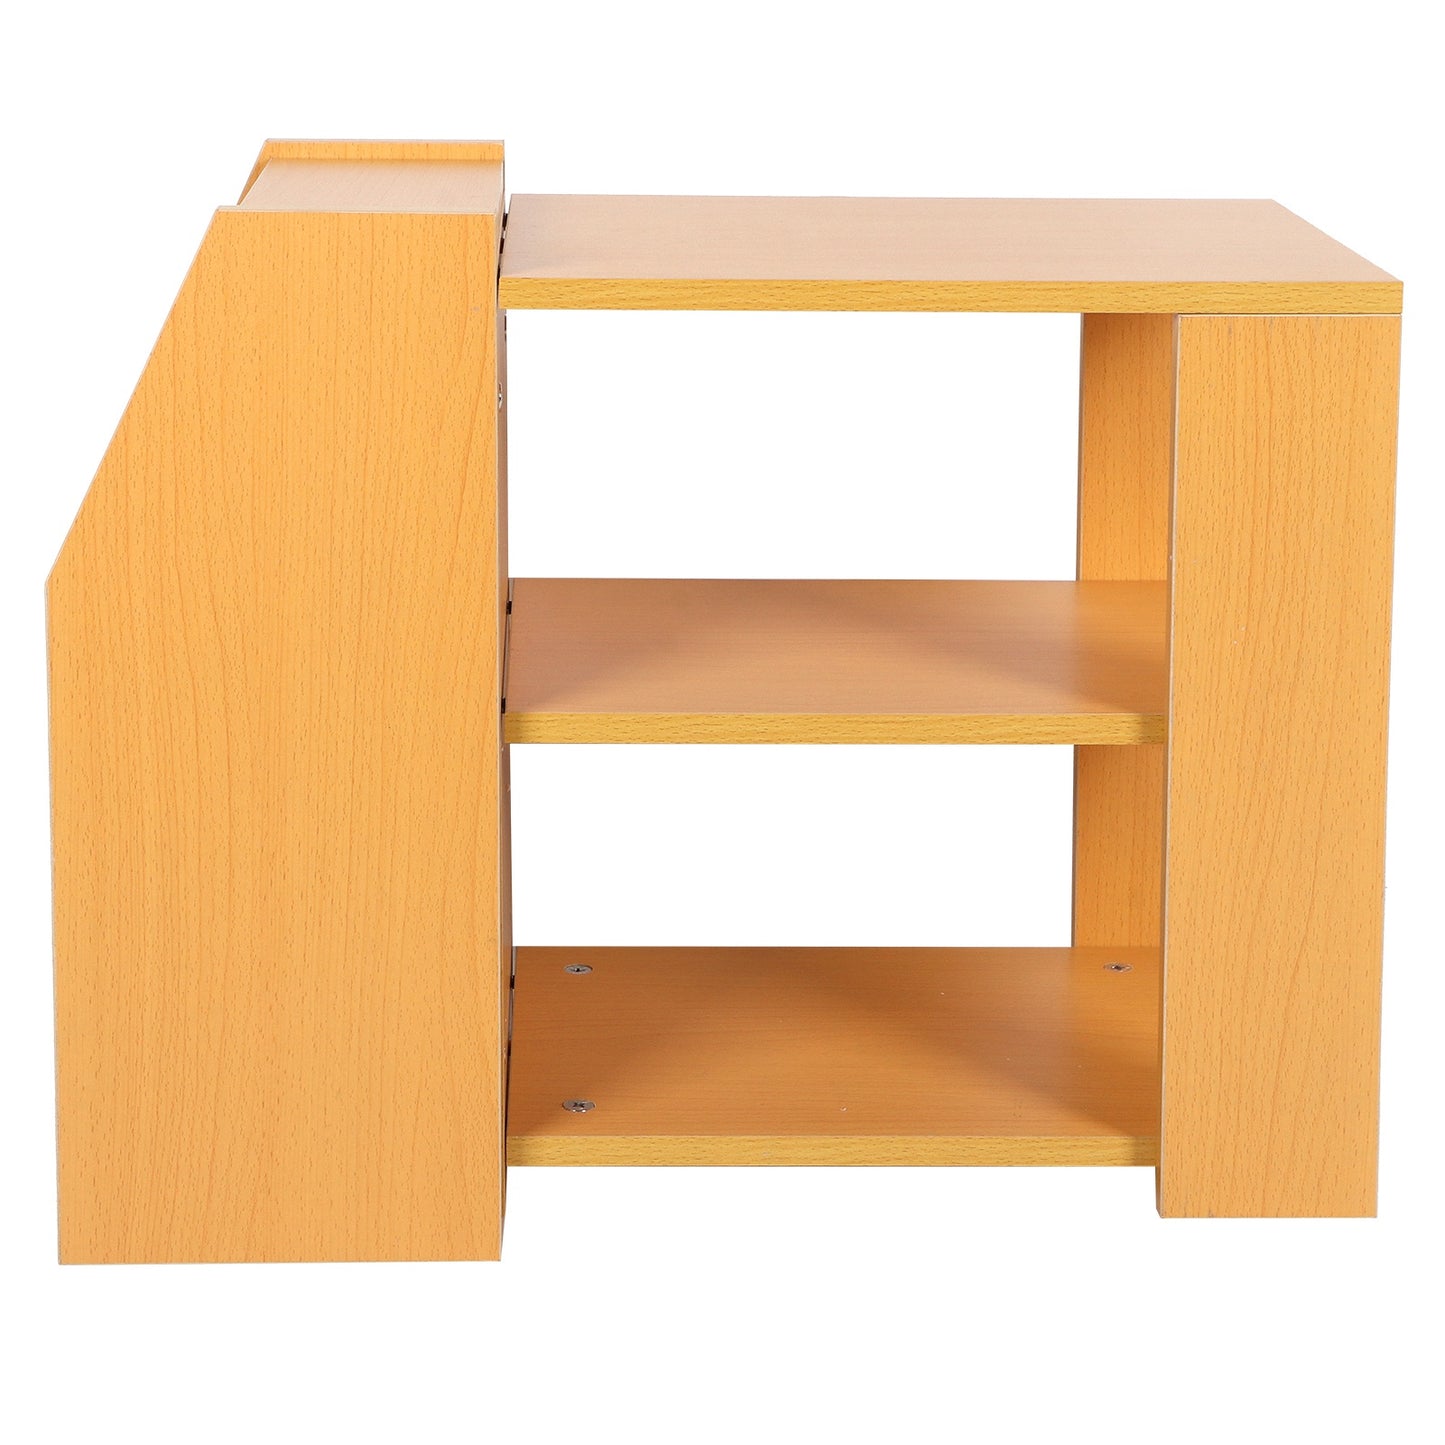 3 Tier Modern Bookshelf Storage Rack Sofa Side Table For Living Room Home Office Furniture